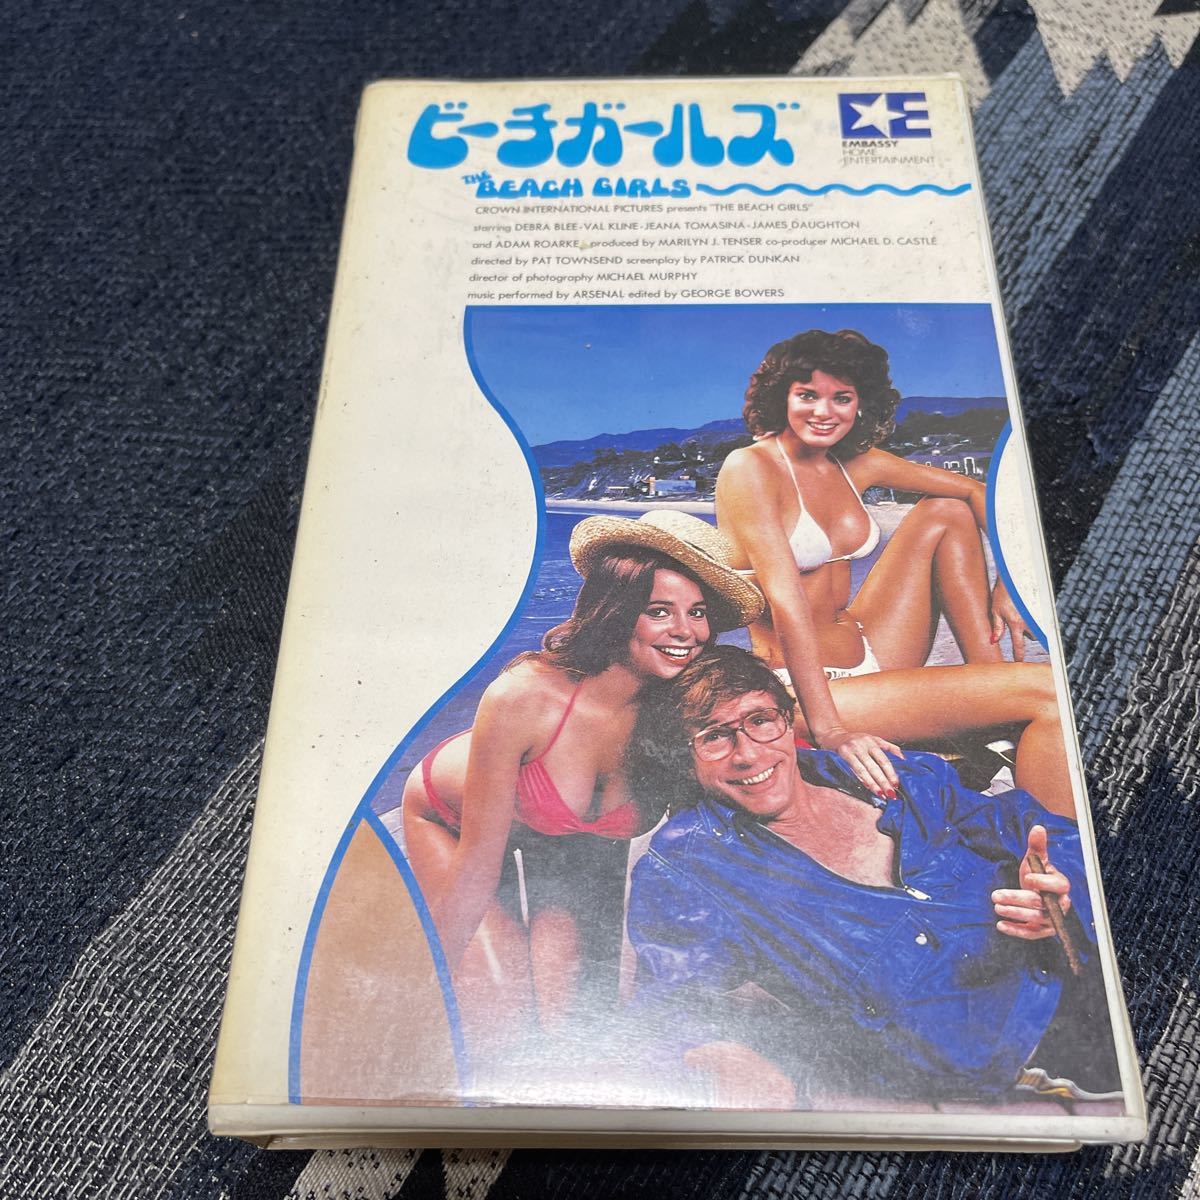  not yet DVD. work beach girls video VHS title America direction pad * Town zento performance tebla*b Lee a dam * Roar k92 minute 